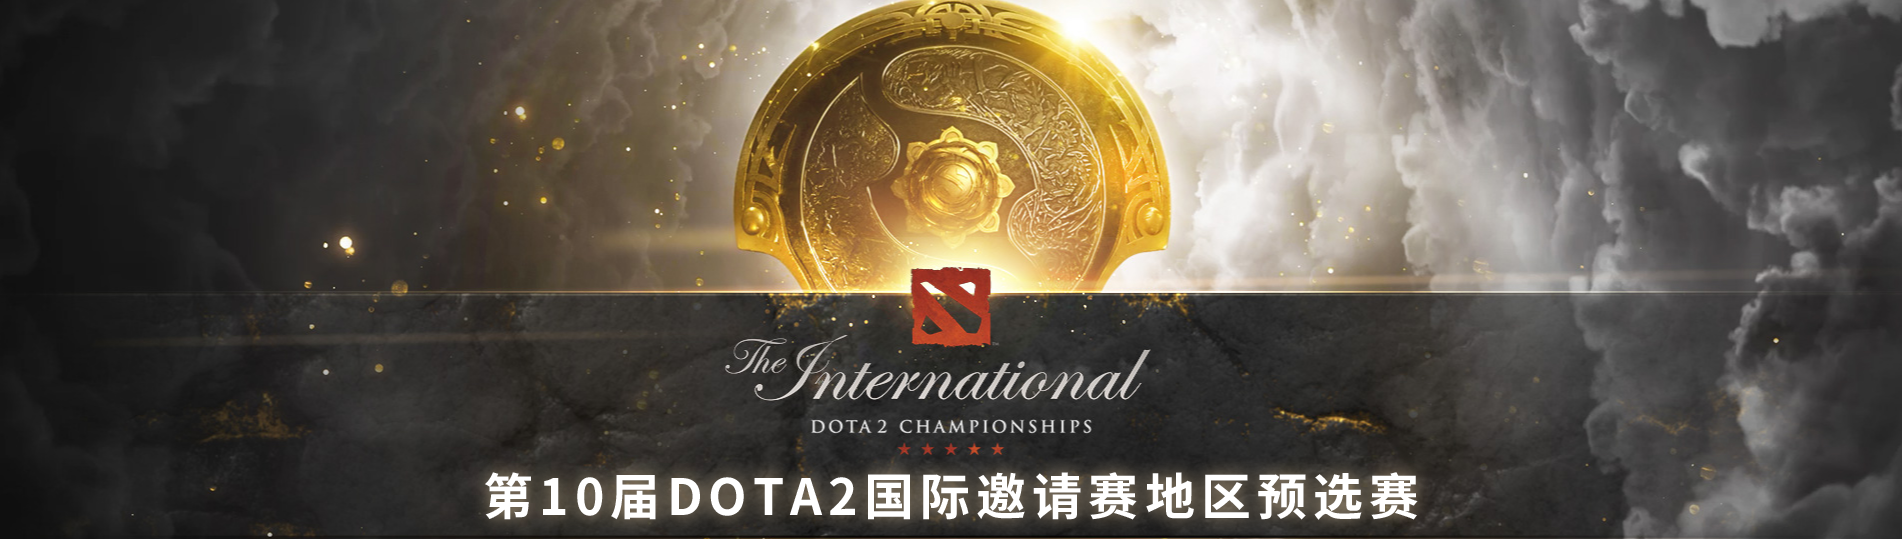 《Dota2》Ti10中国区预选赛：Phoenix vs SAG比赛视频